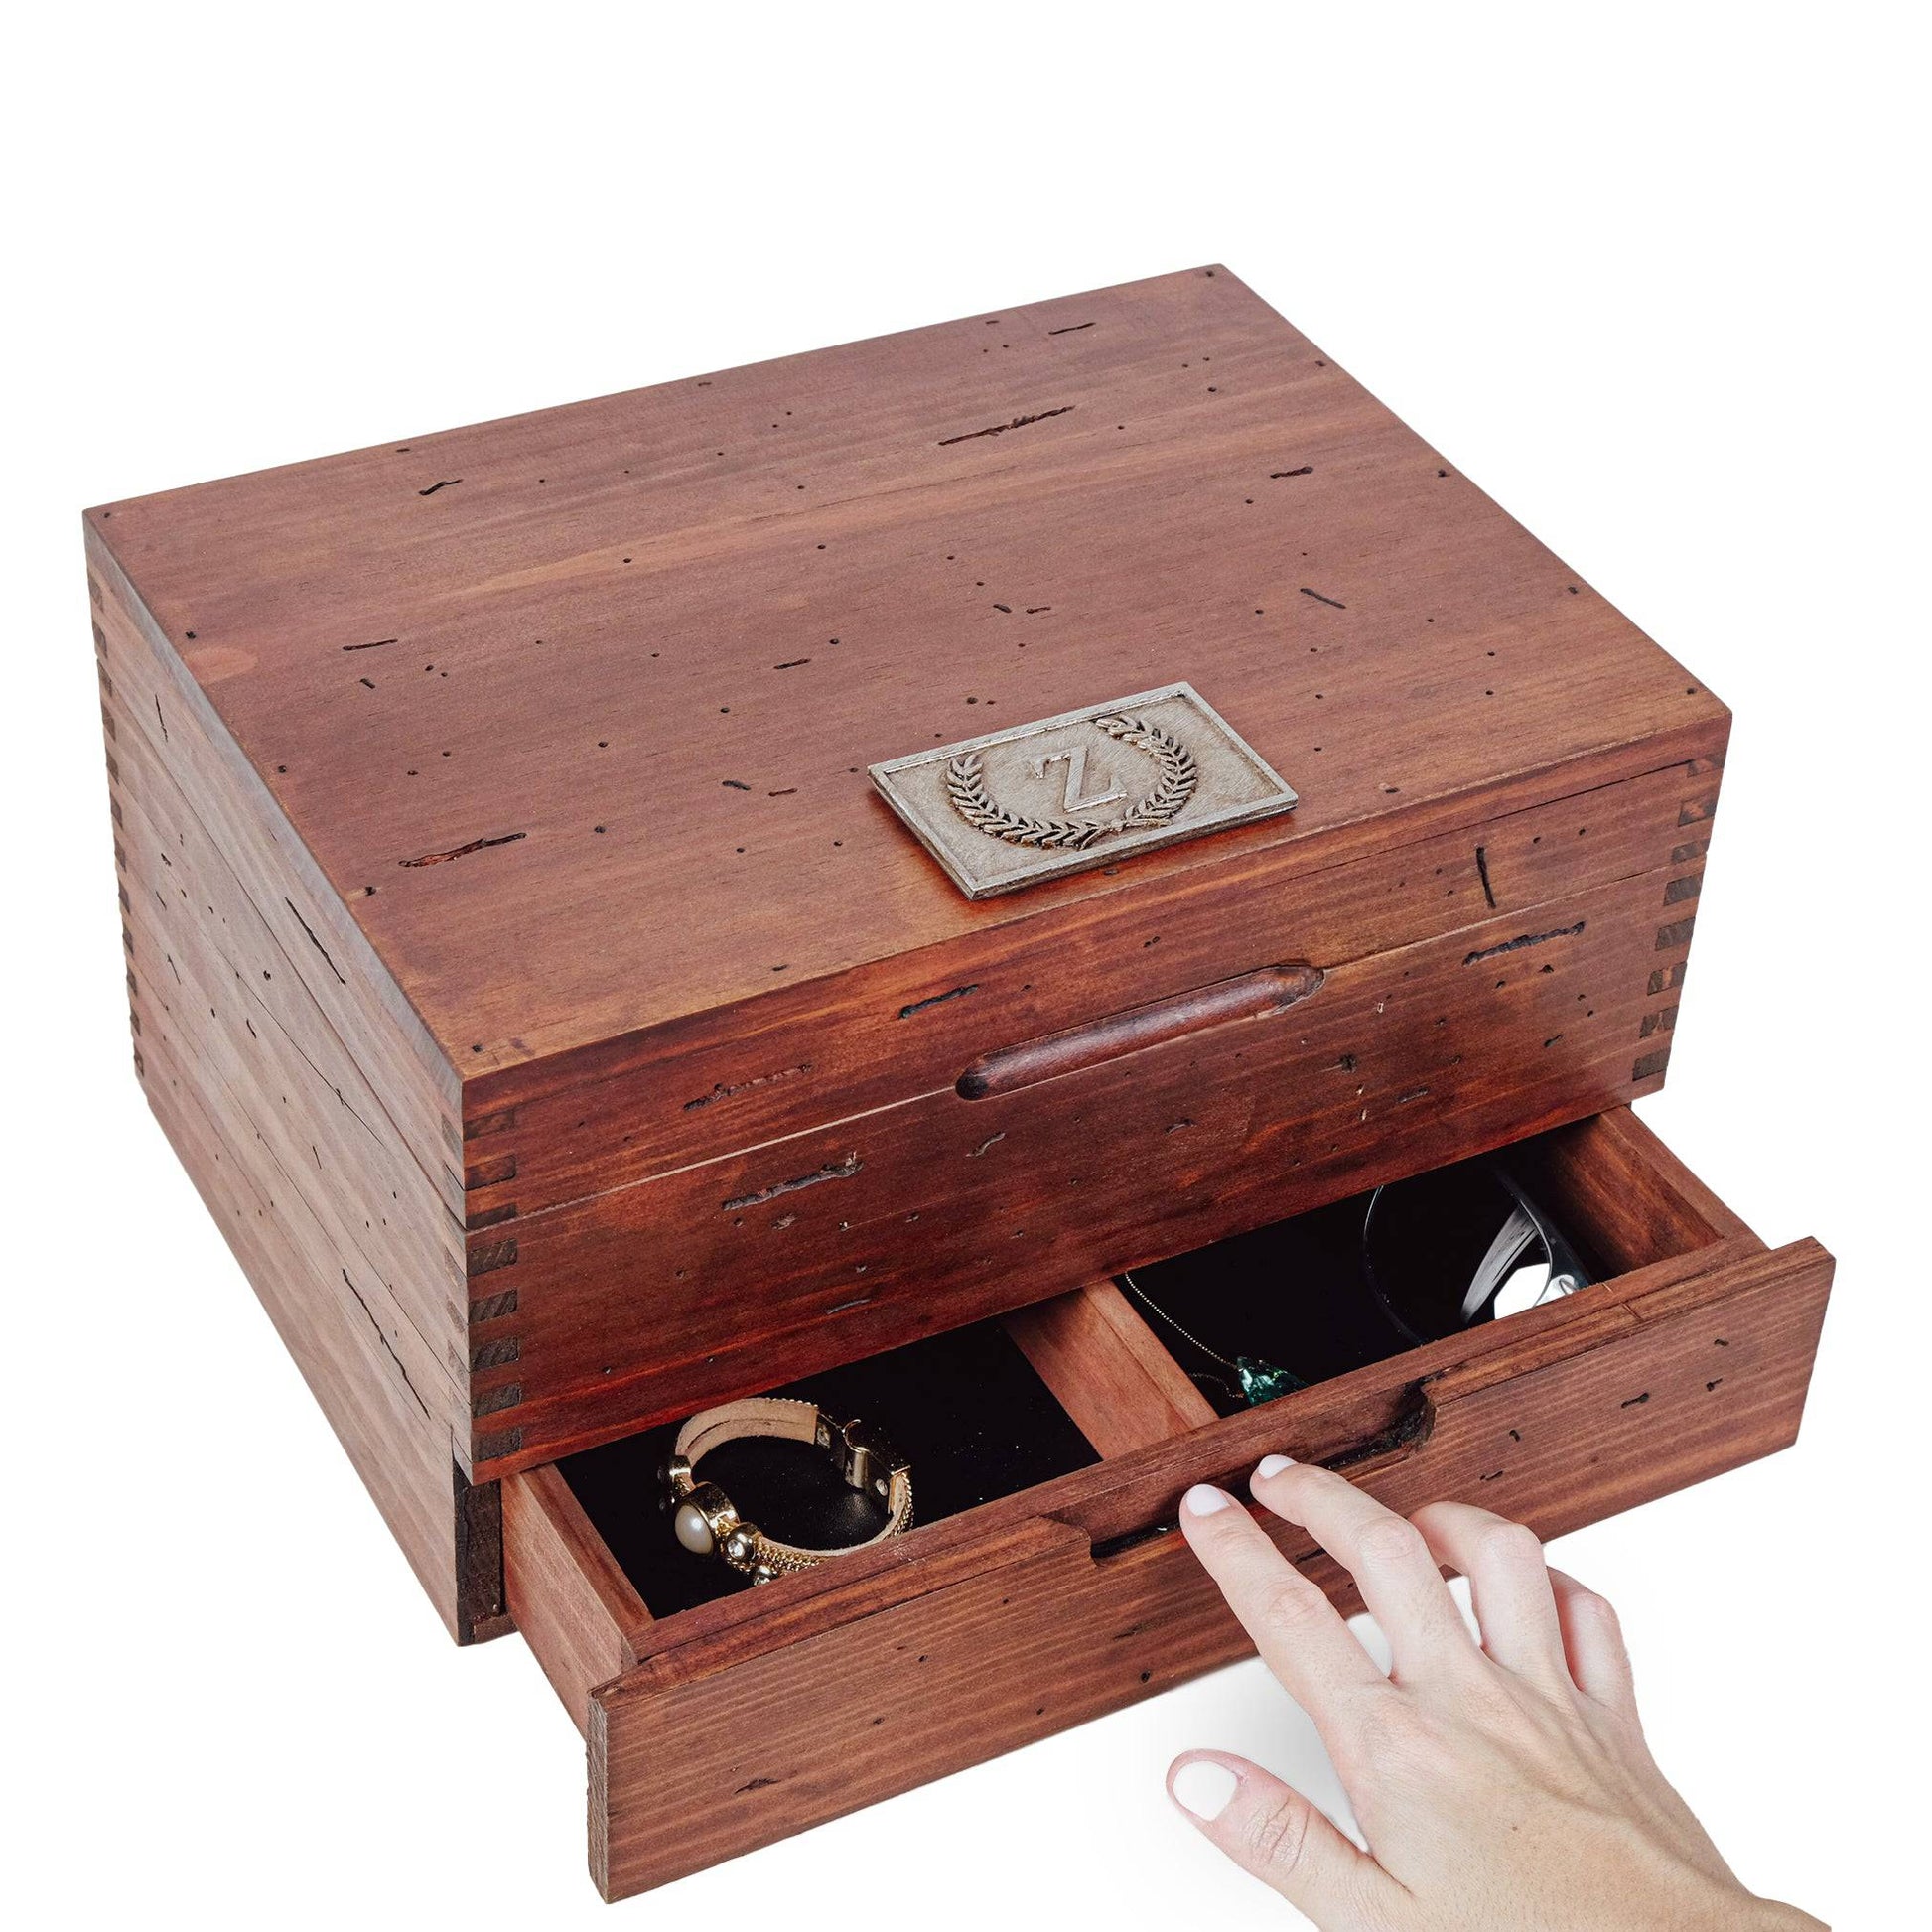 Women's Jewelry Box with Drawer - Deferichs